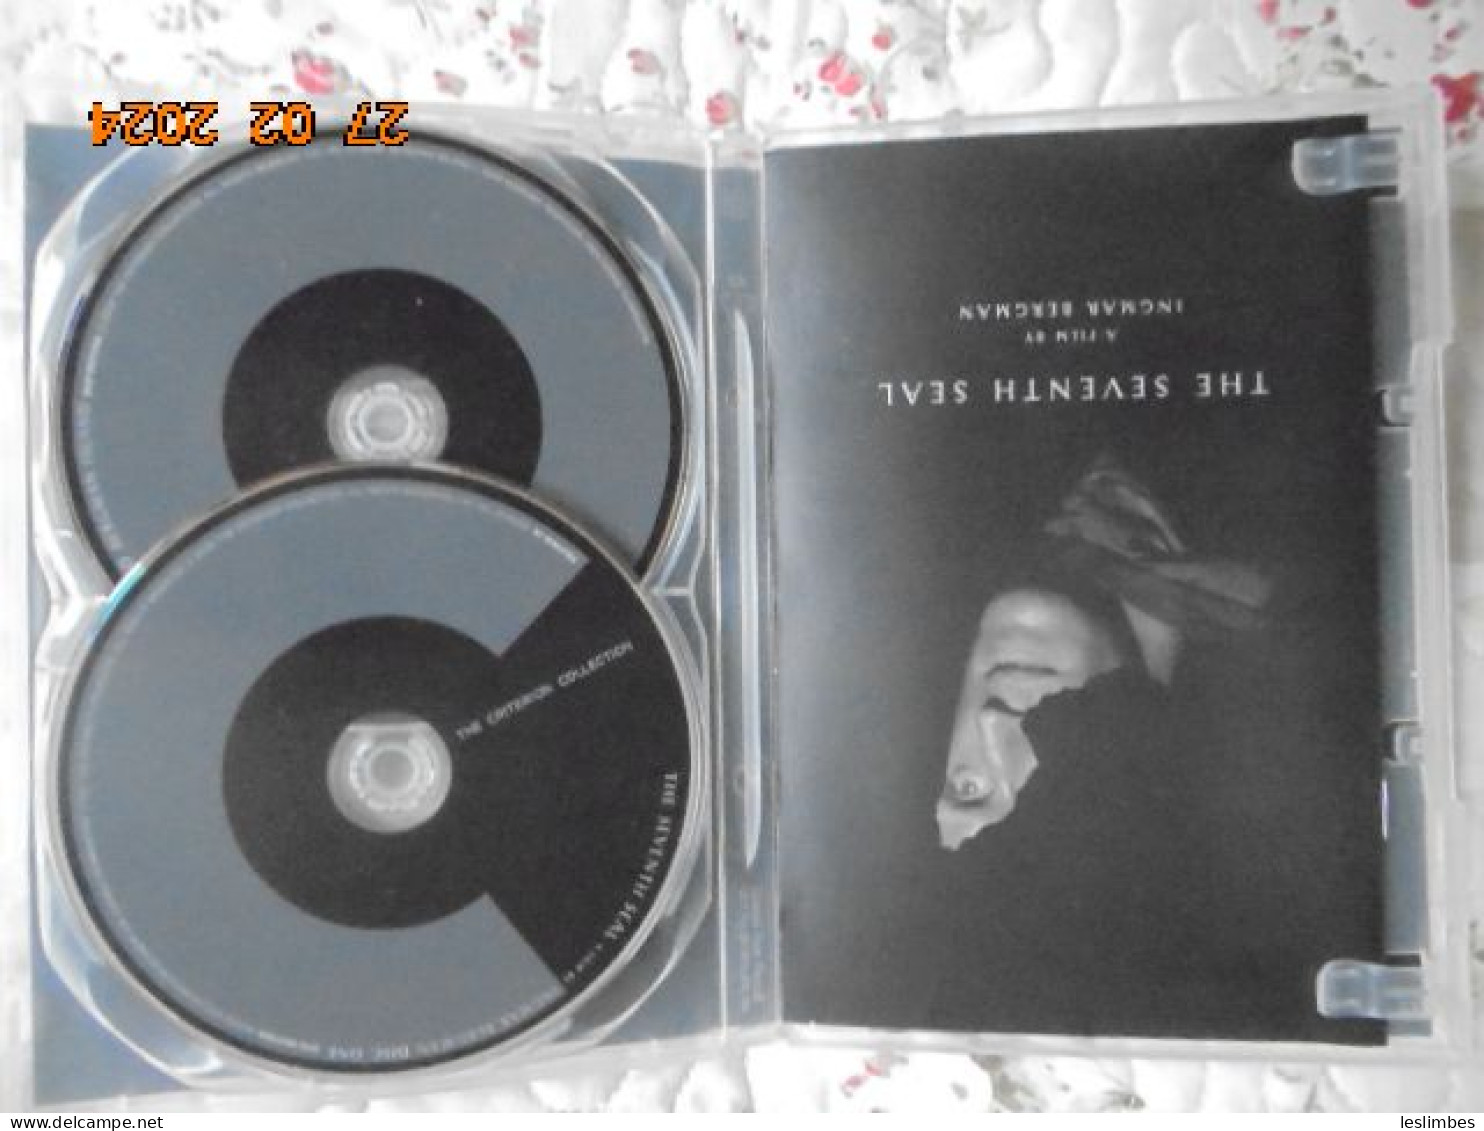 Seventh Seal (The Criterion Collection) -  [DVD] [Region 1] [US Import] [NTSC] Ingmar Bergman - Classiques